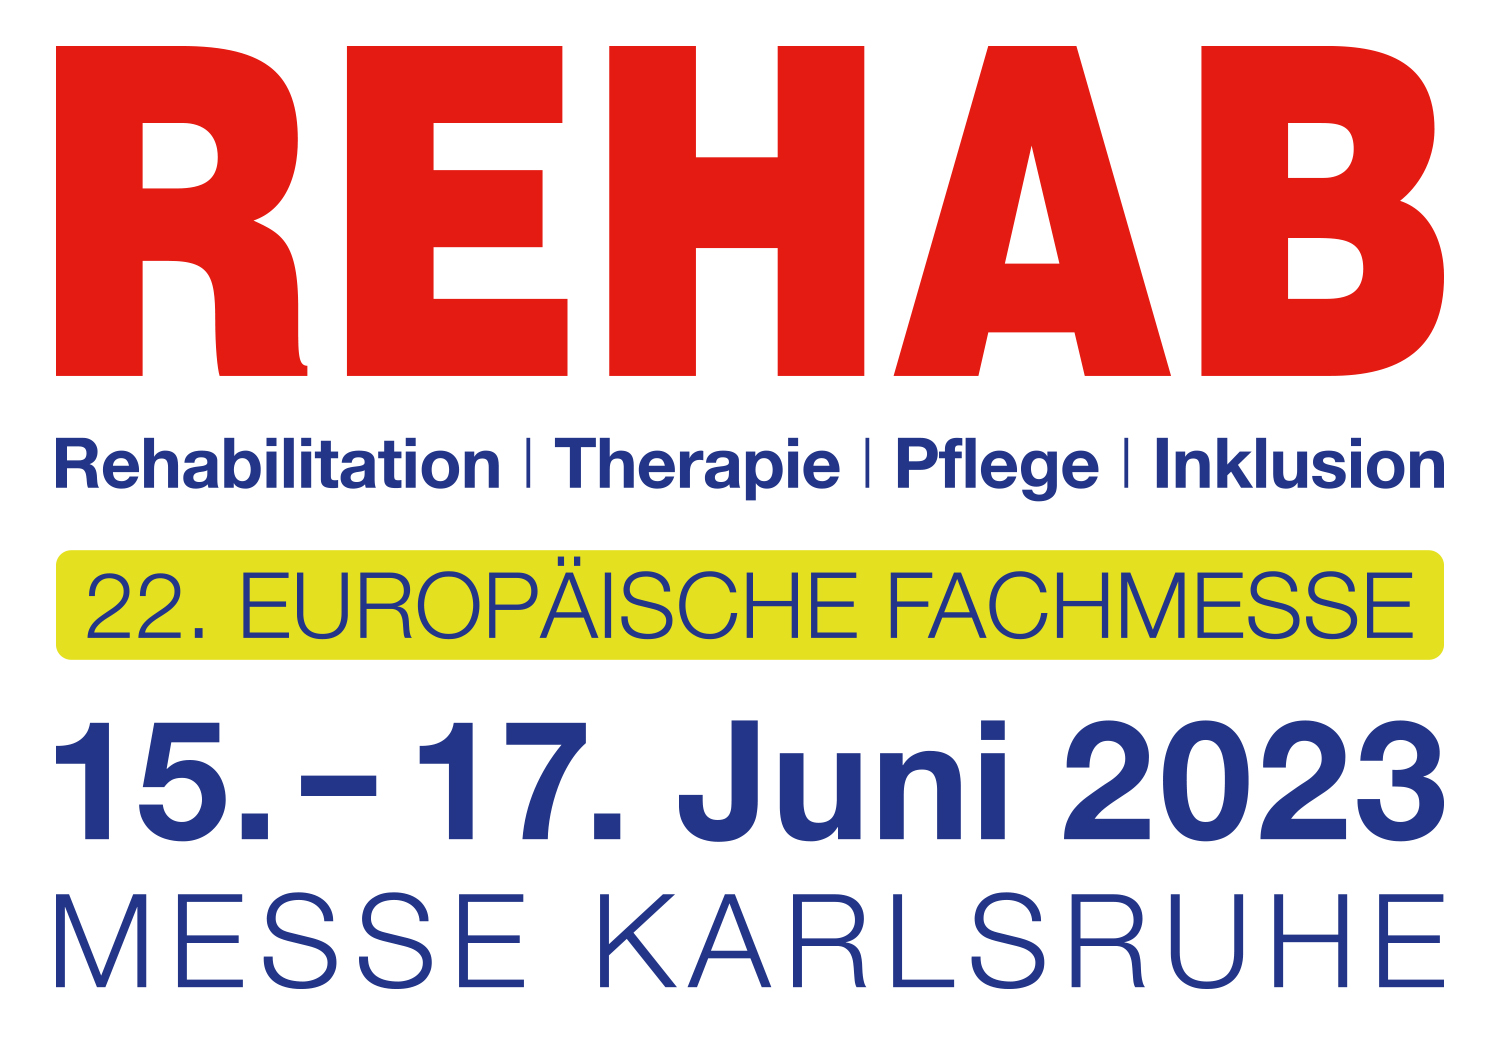 REHAB - Rehabilitation, Therapie, Pflege, Inklusion